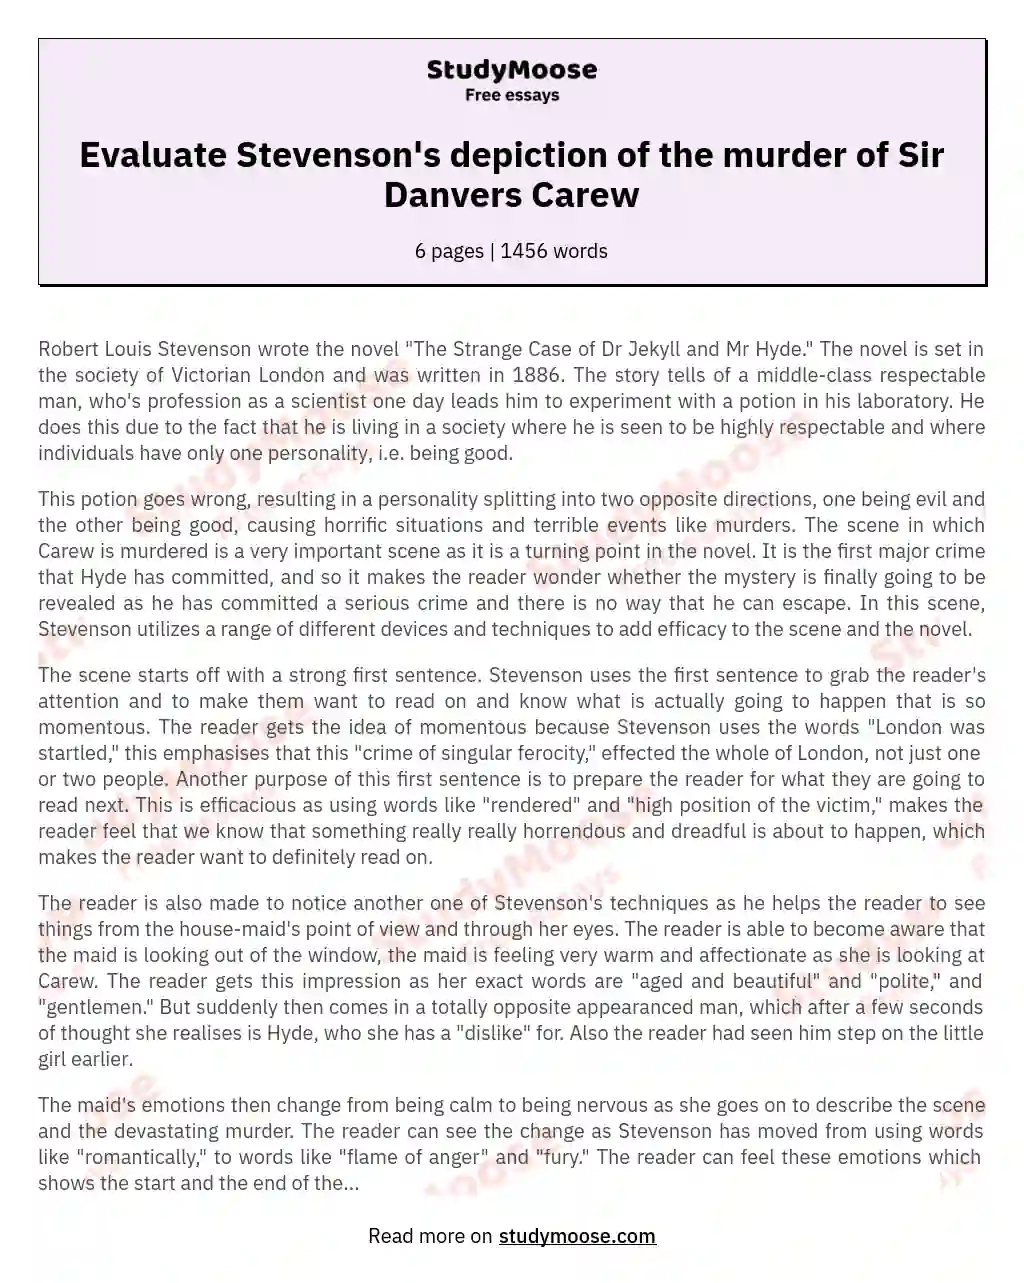 Evaluate Stevenson's depiction of the murder of Sir Danvers Carew essay